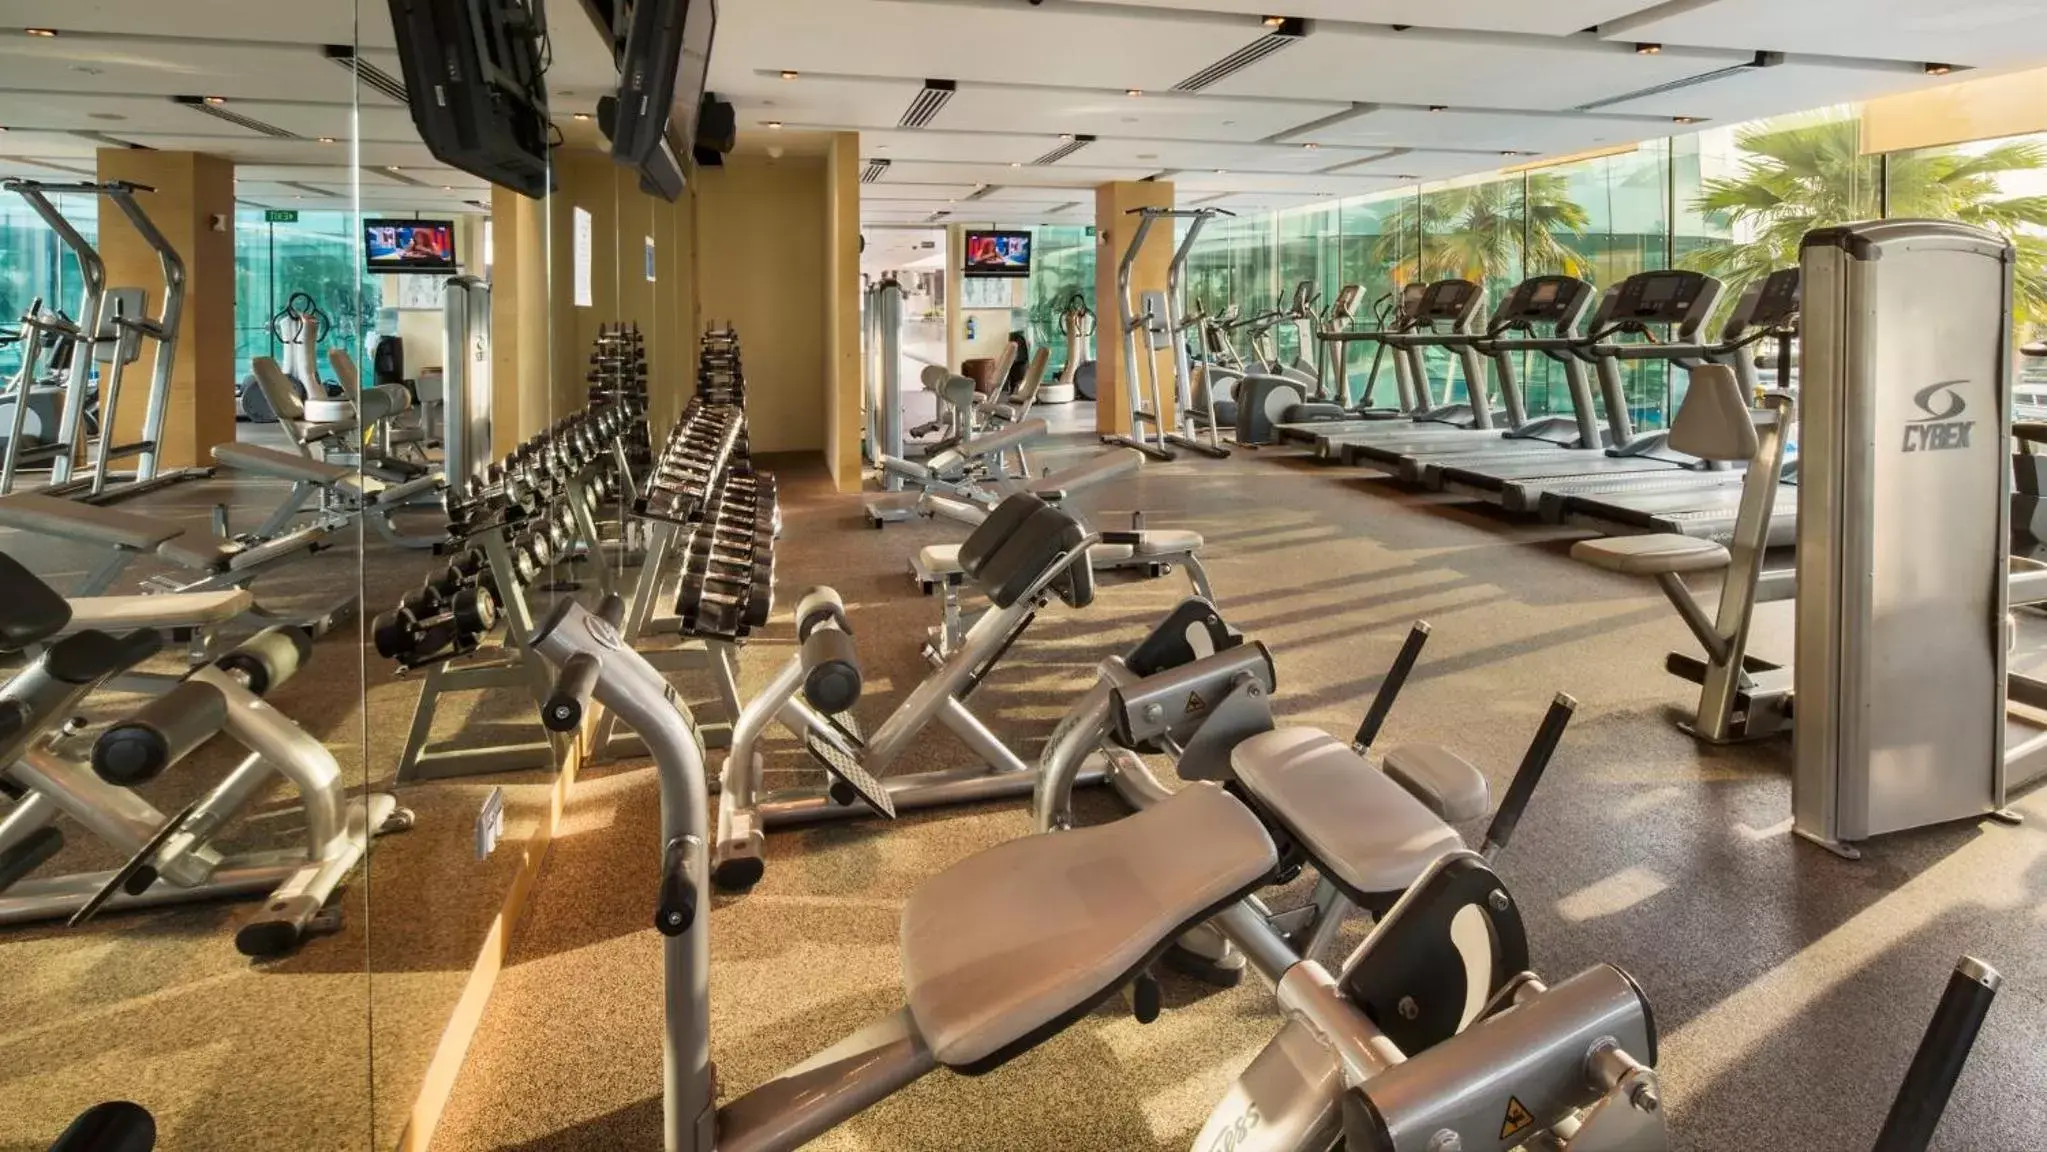 Fitness centre/facilities, Fitness Center/Facilities in ONE15 Marina Sentosa Cove Singapore